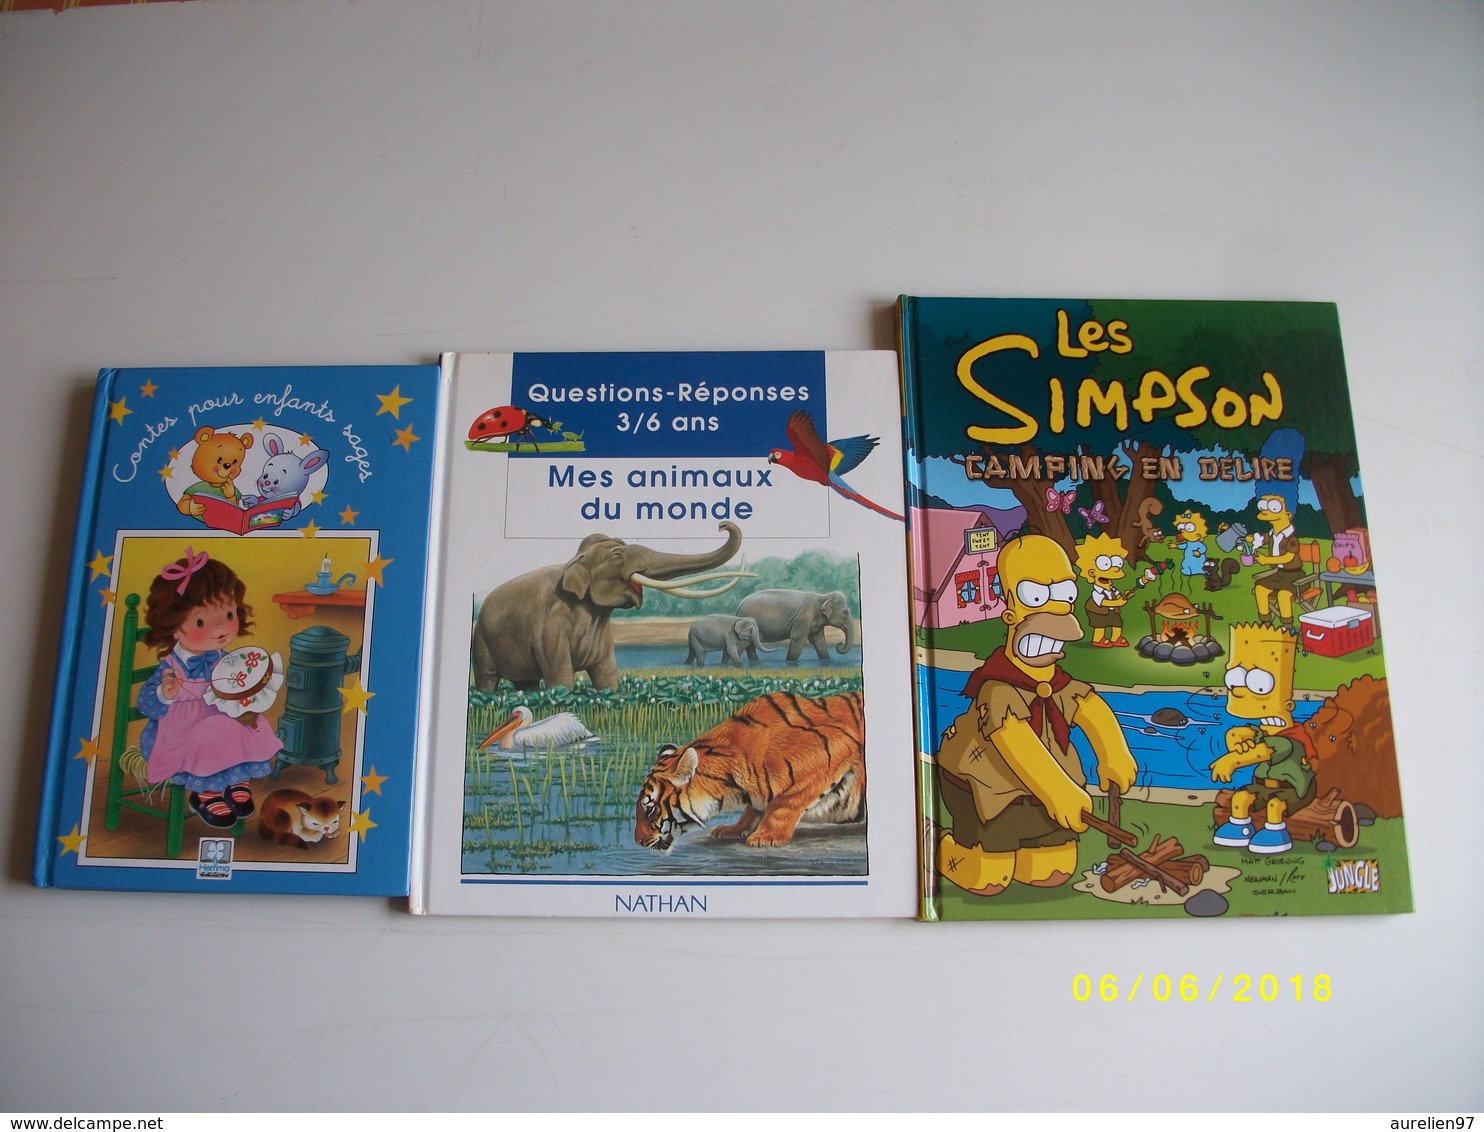 Lot De 8 Livres Enfants/ados - Paquete De Libros